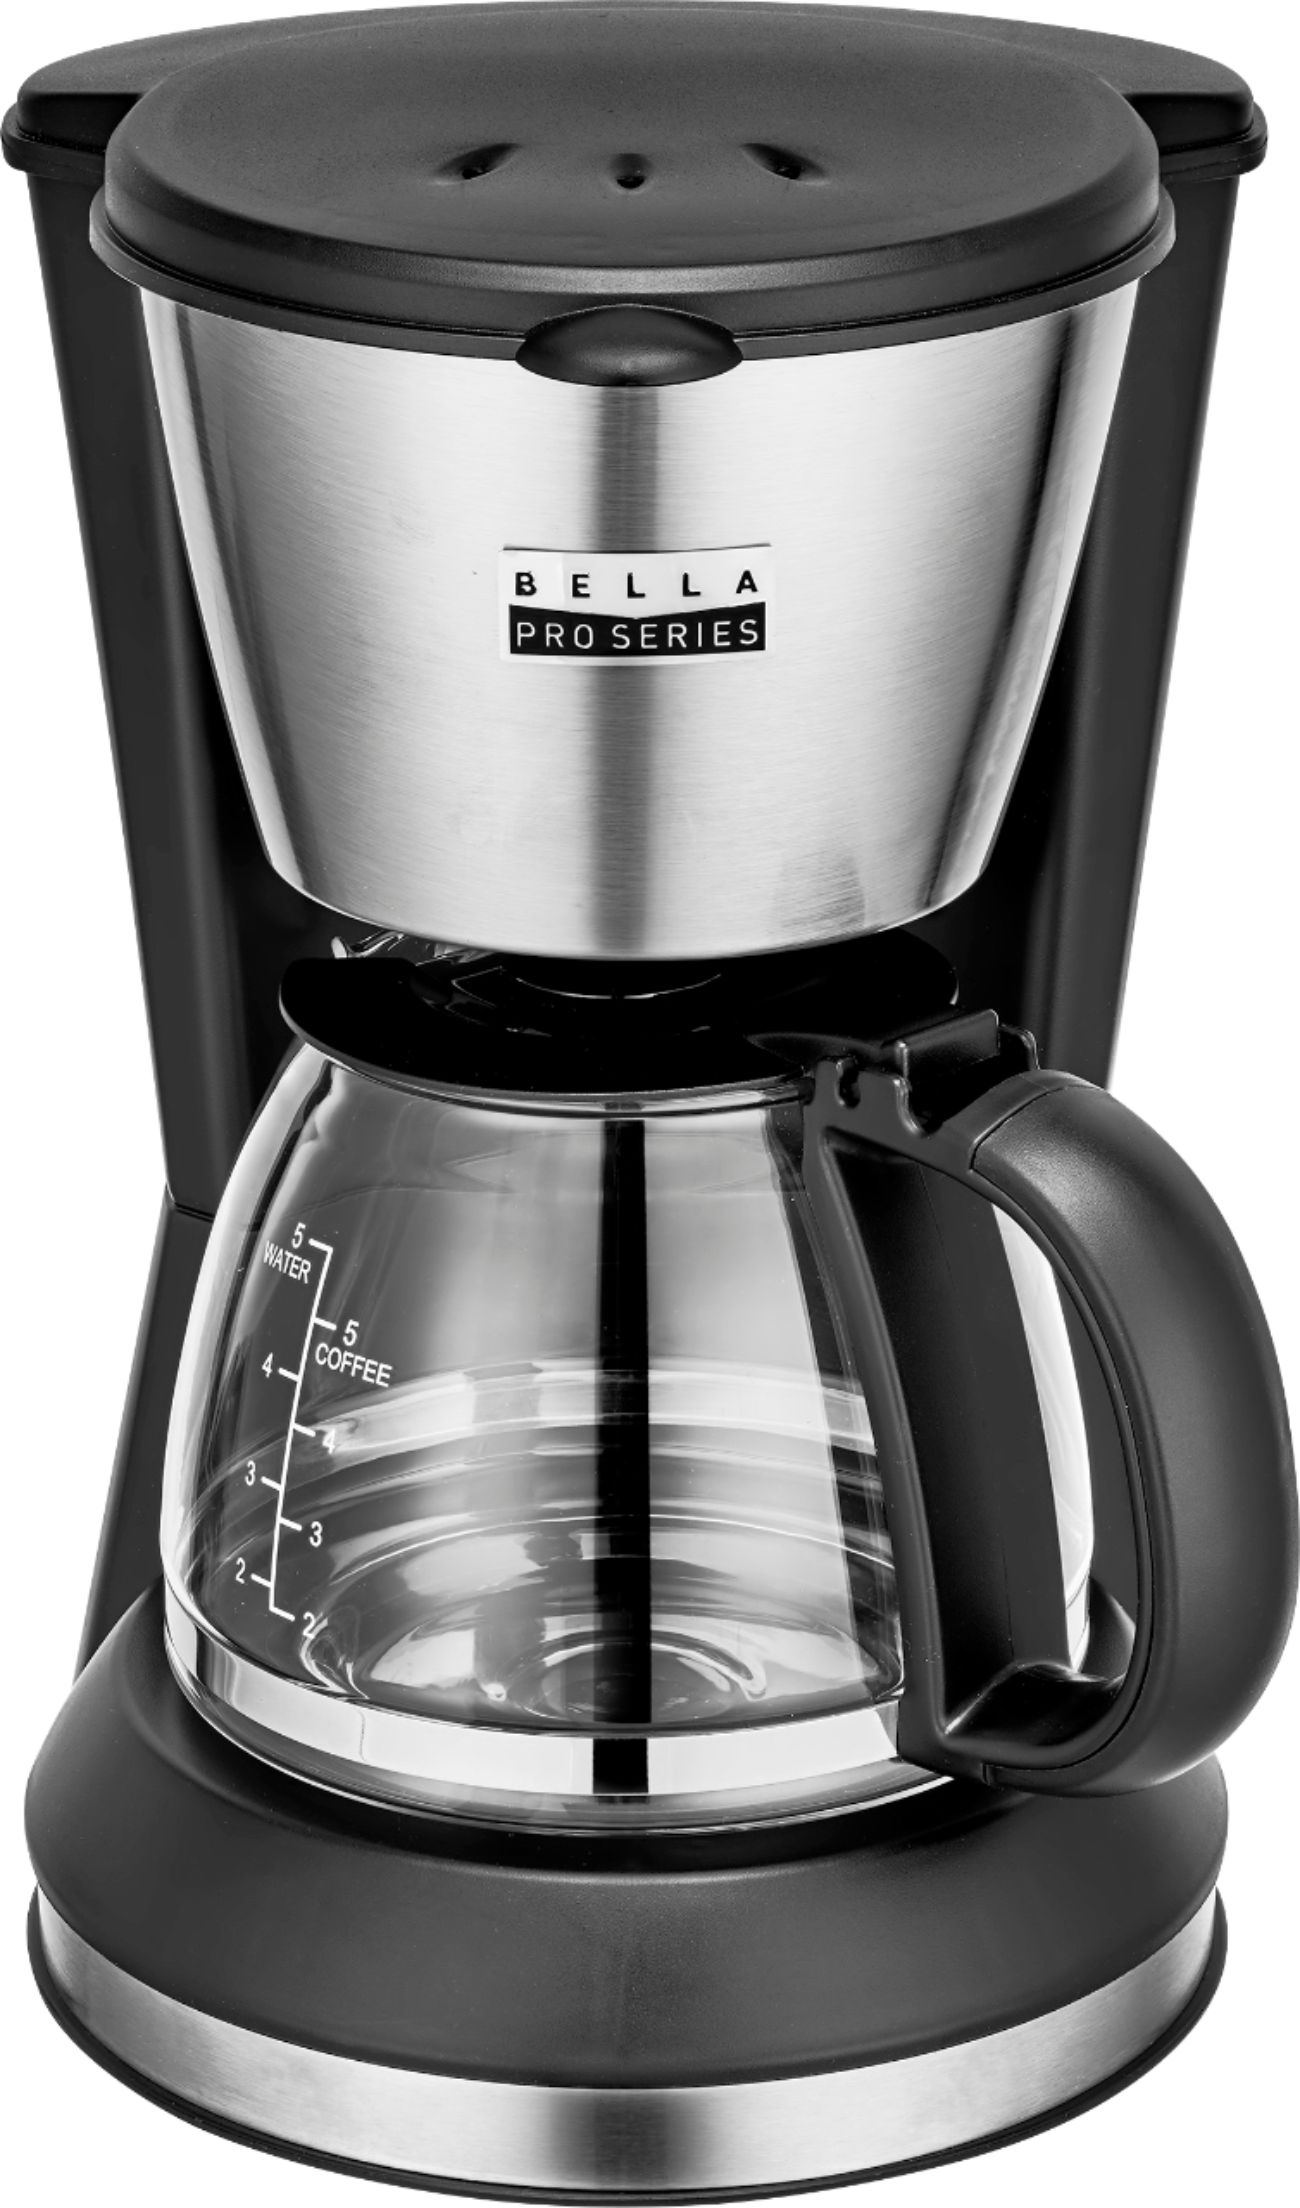 Bella Pro Series - 5-Cup Coffee Maker - Stainless Steel Best Buy, free store pickup $9.99